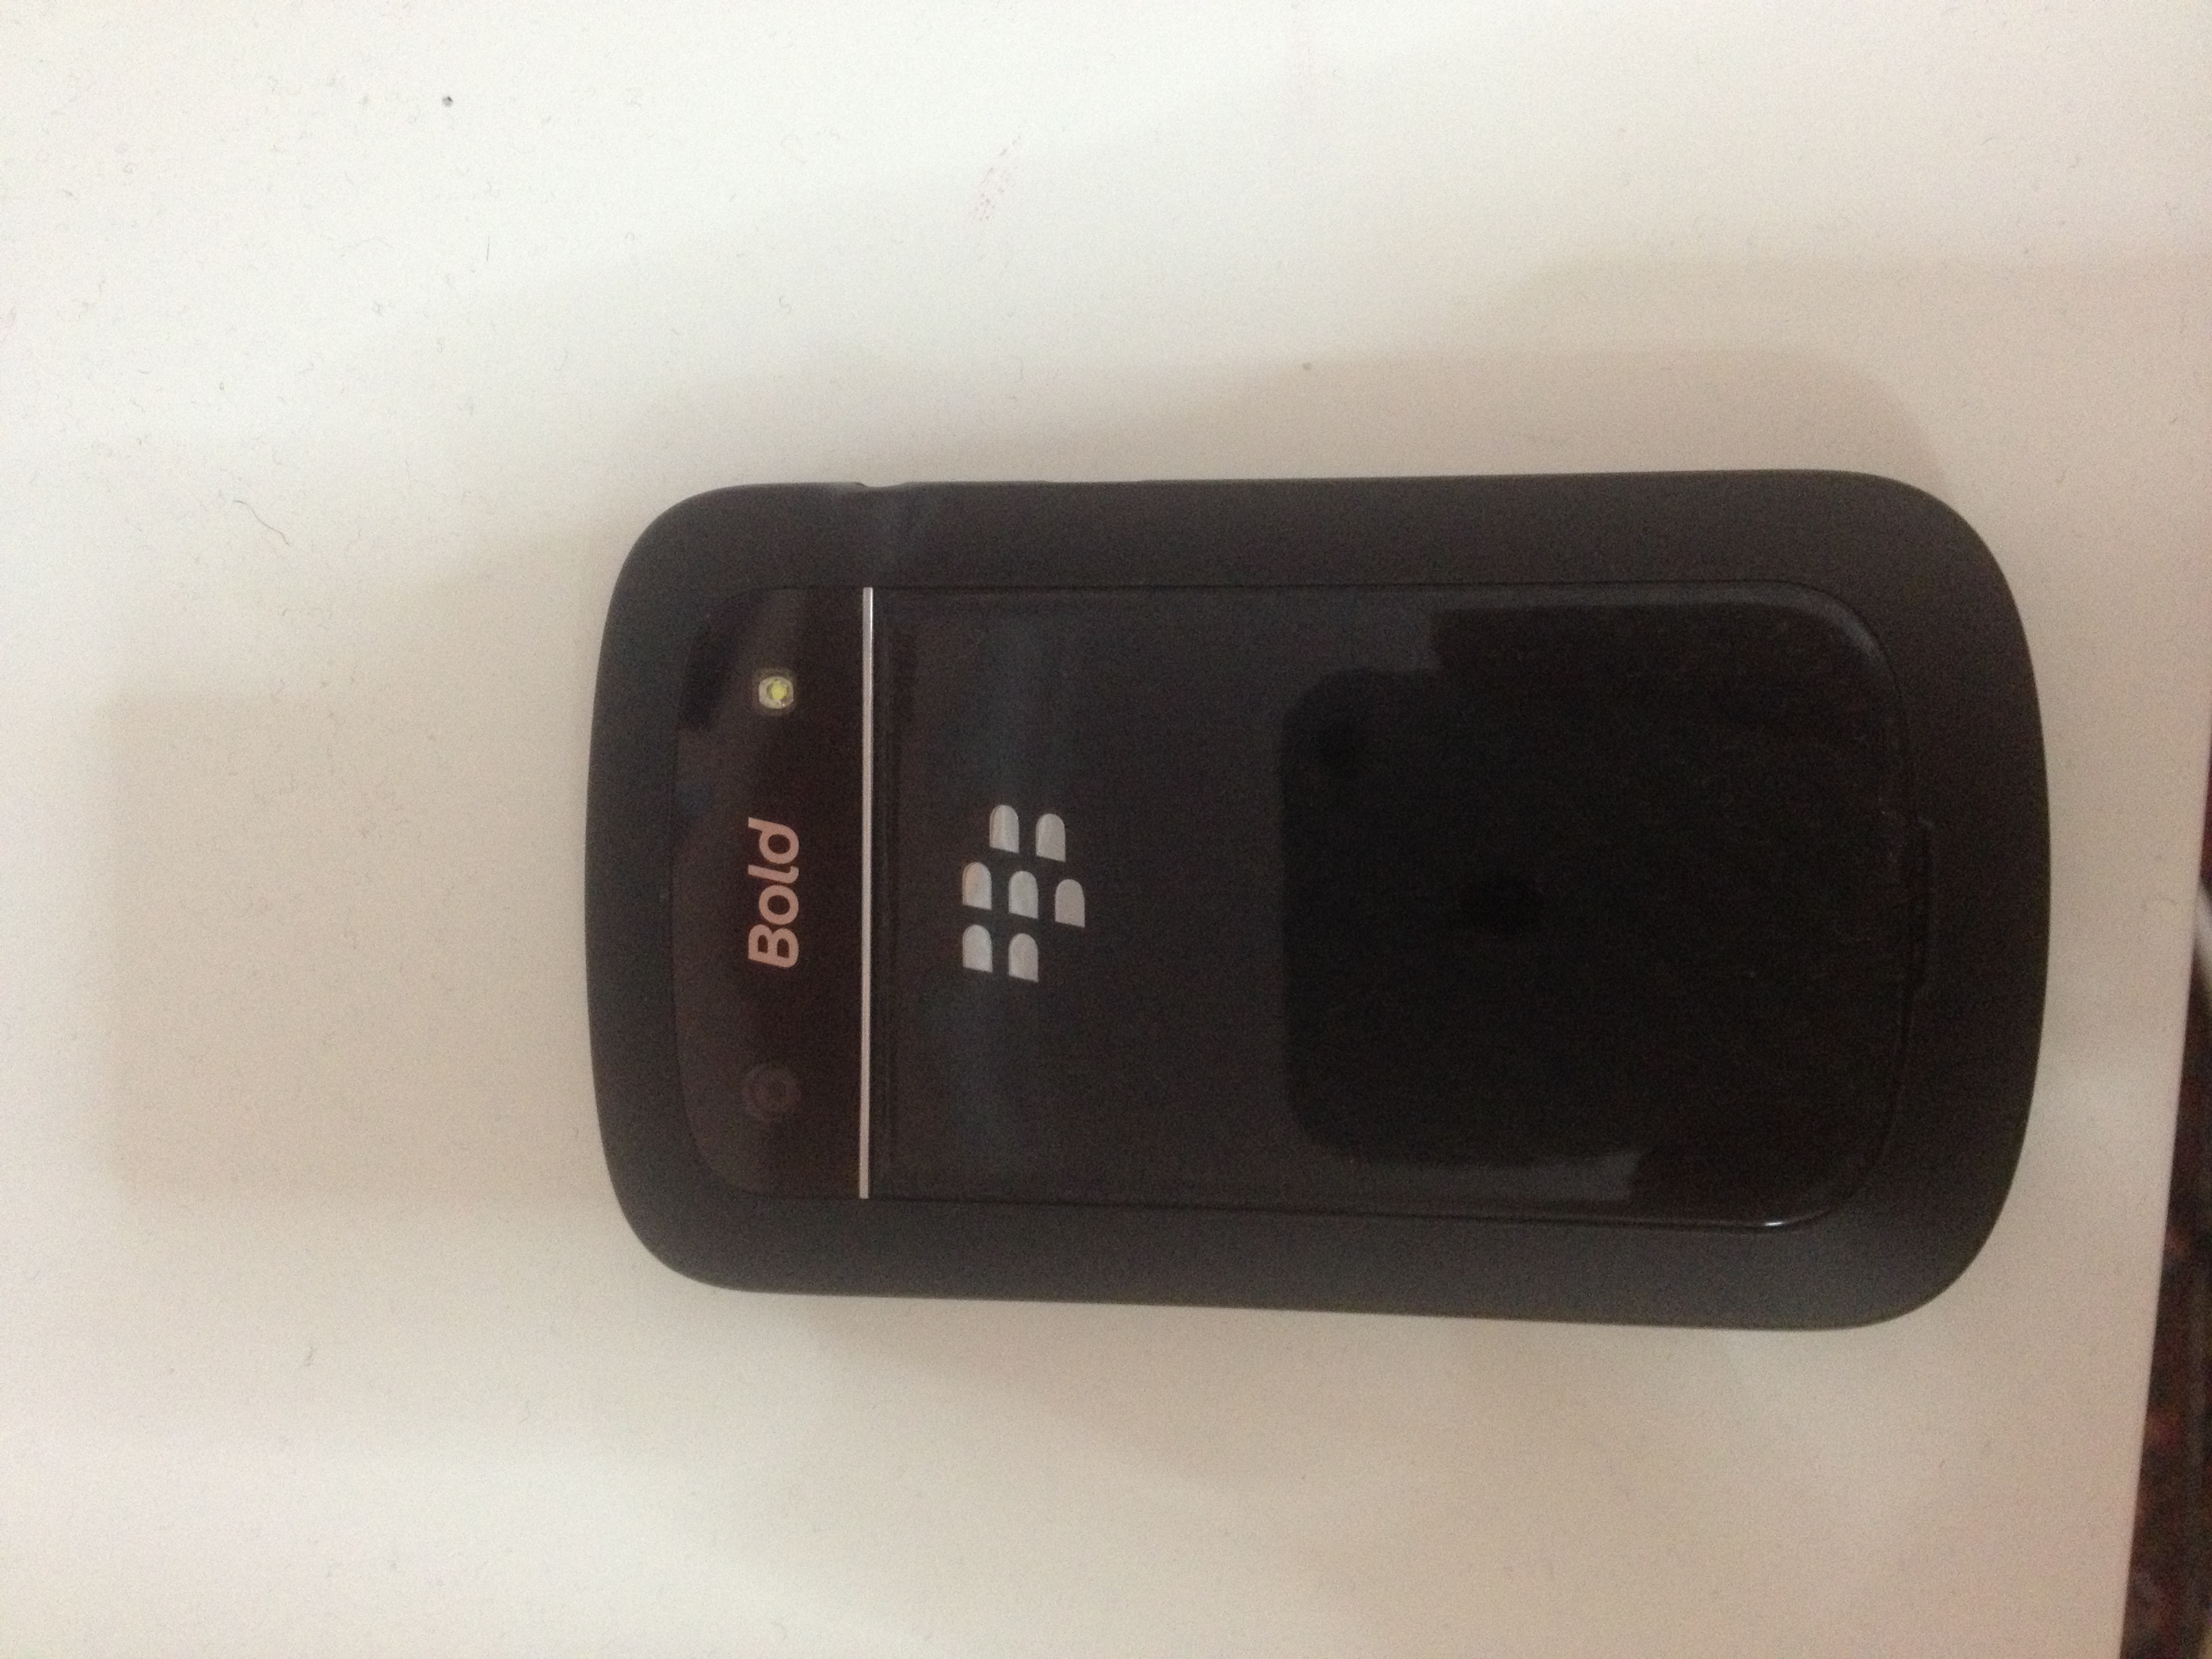  Blackberry Bold 9900 Temiz + Full Kutu + Fatura + KVK Garanti